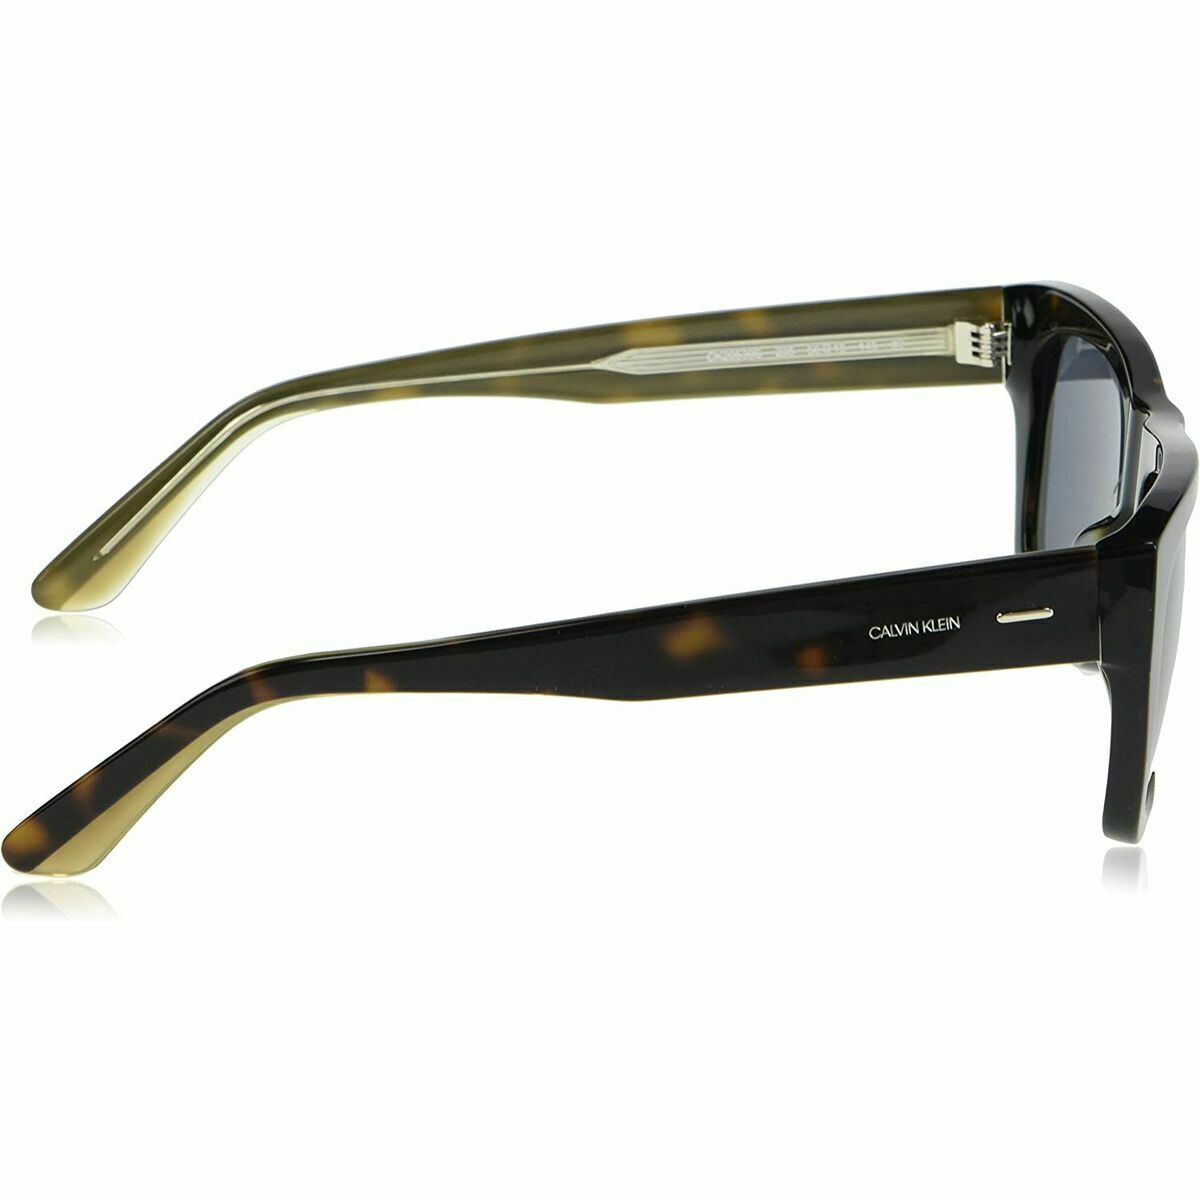 Kaufe Herrensonnenbrille Calvin Klein CK20539S ø 56 mm (Ø 56 mm) bei AWK Flagship um € 63.00